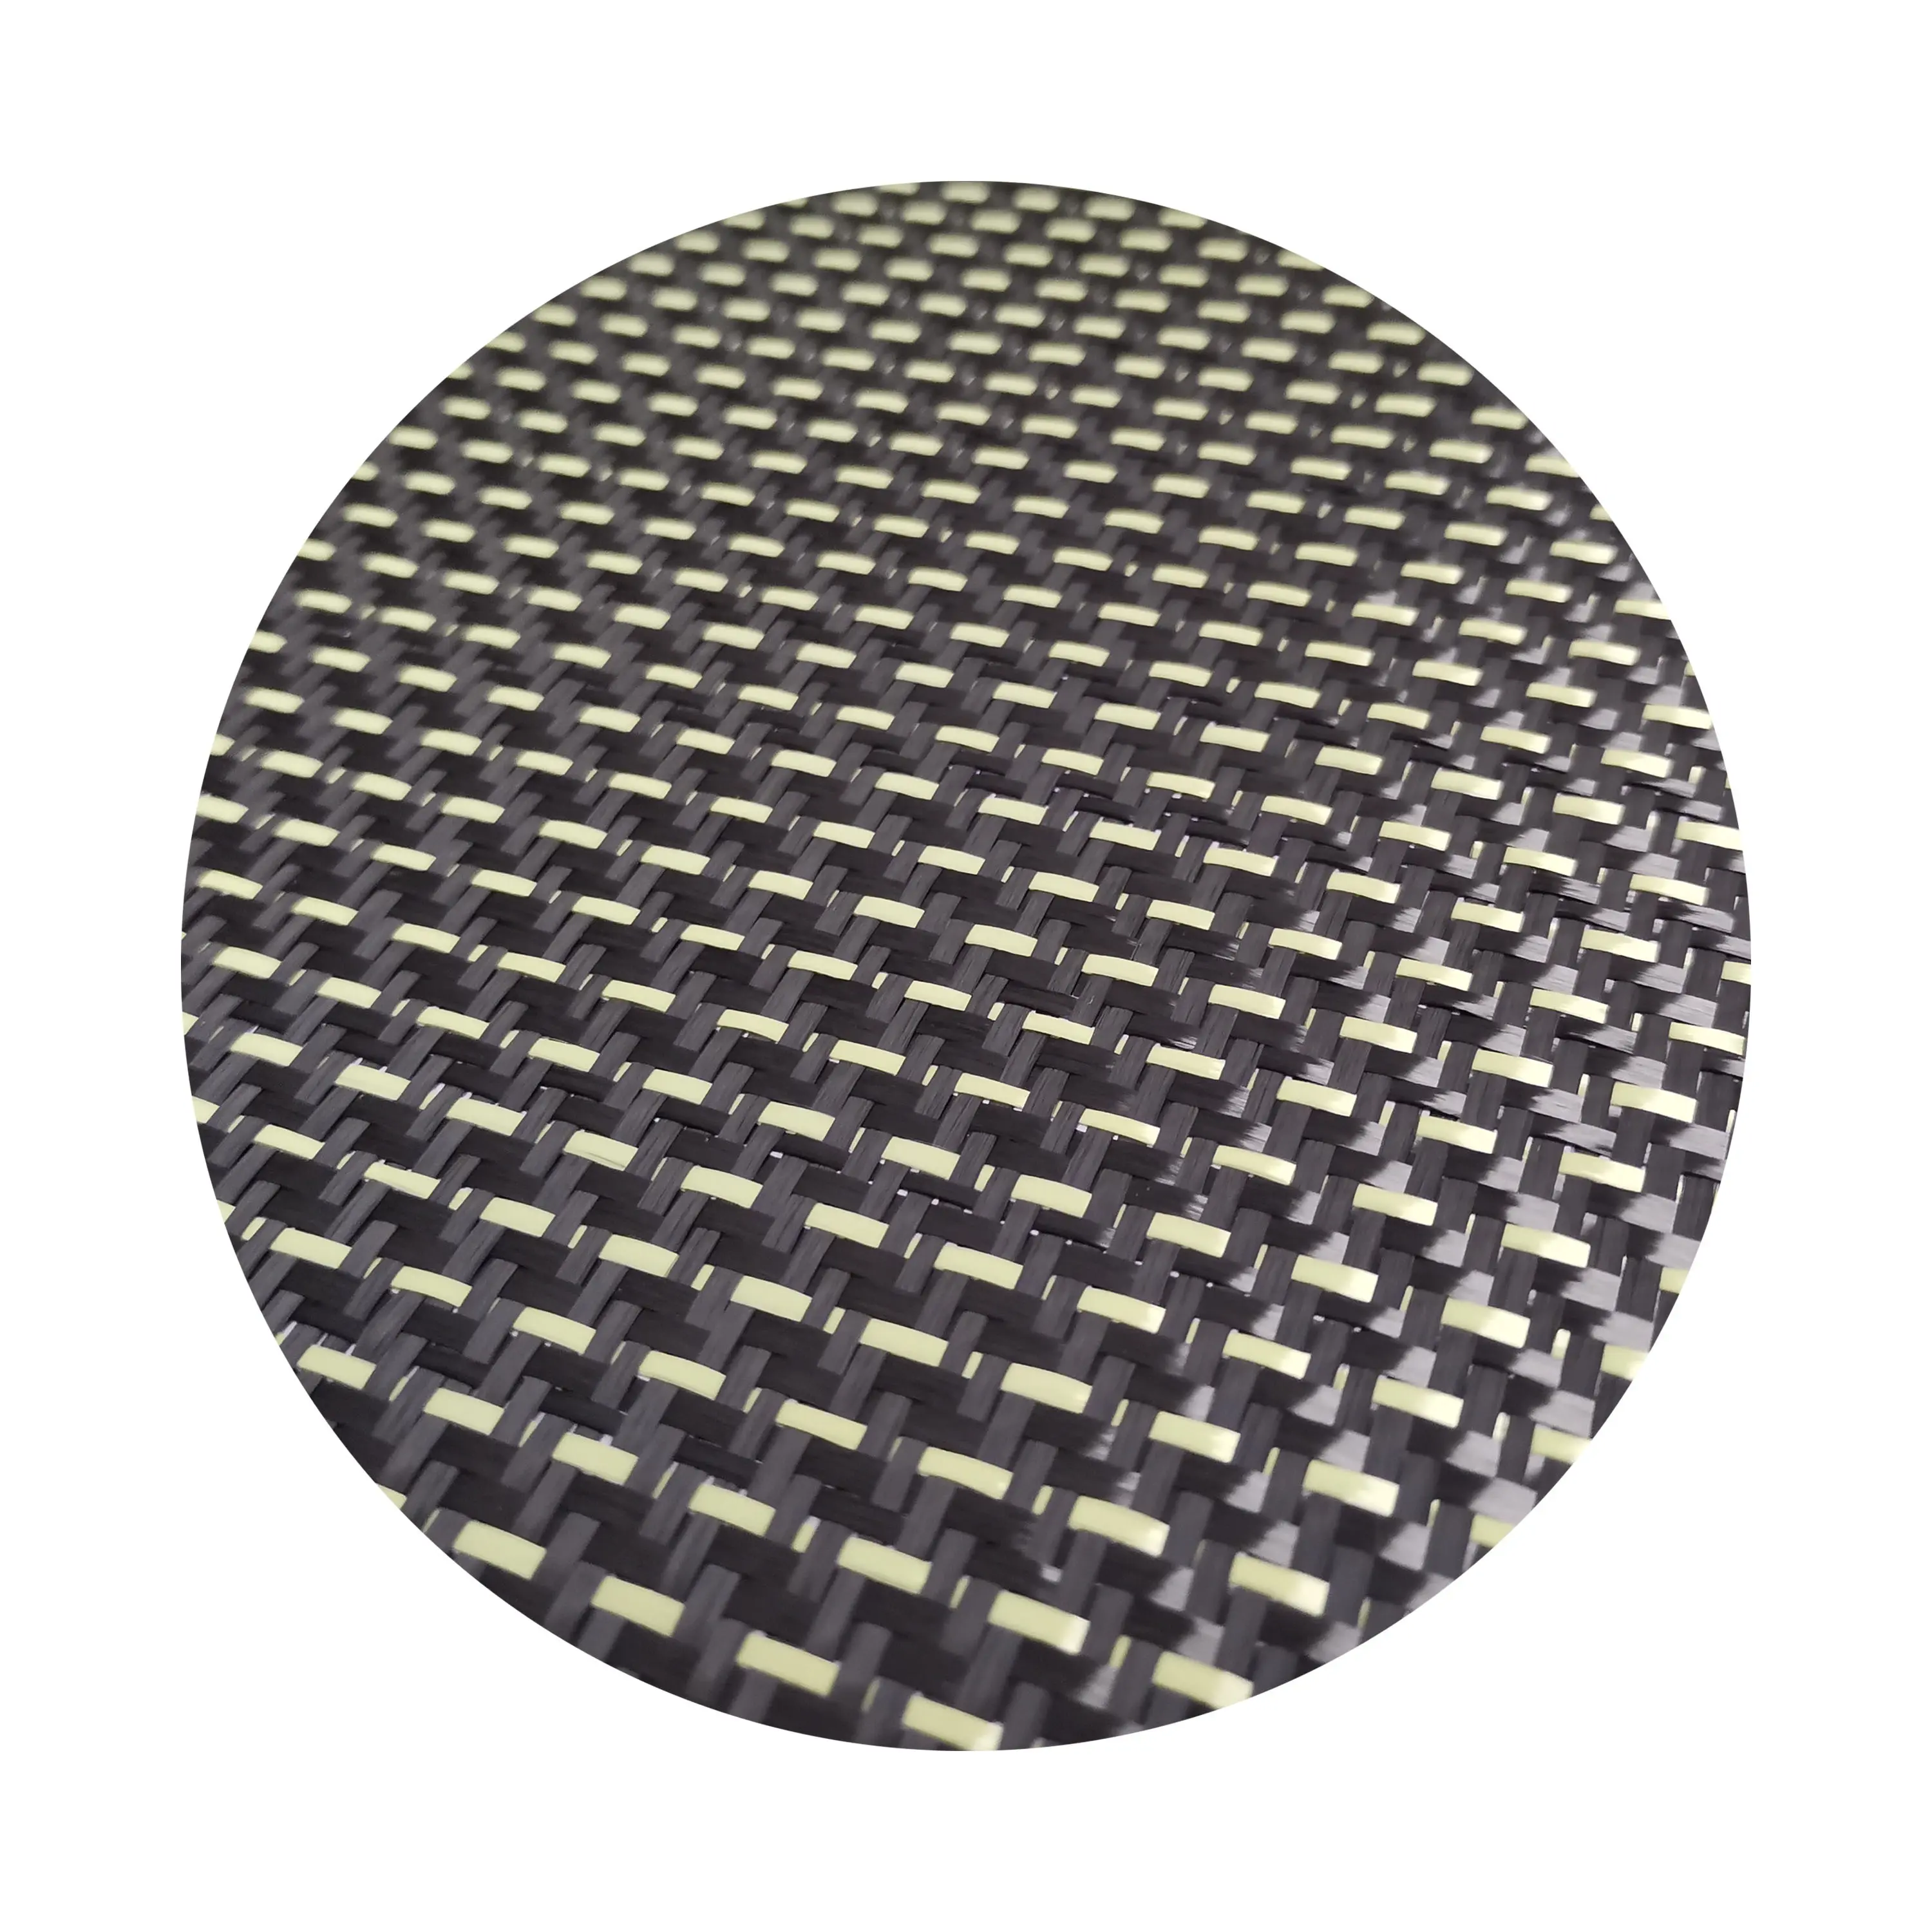 3k 200gsm Hybrid Carbon Fiber Fabric Plain Woven Fiber Cloth Yellow/Black Mixed 2 Colors